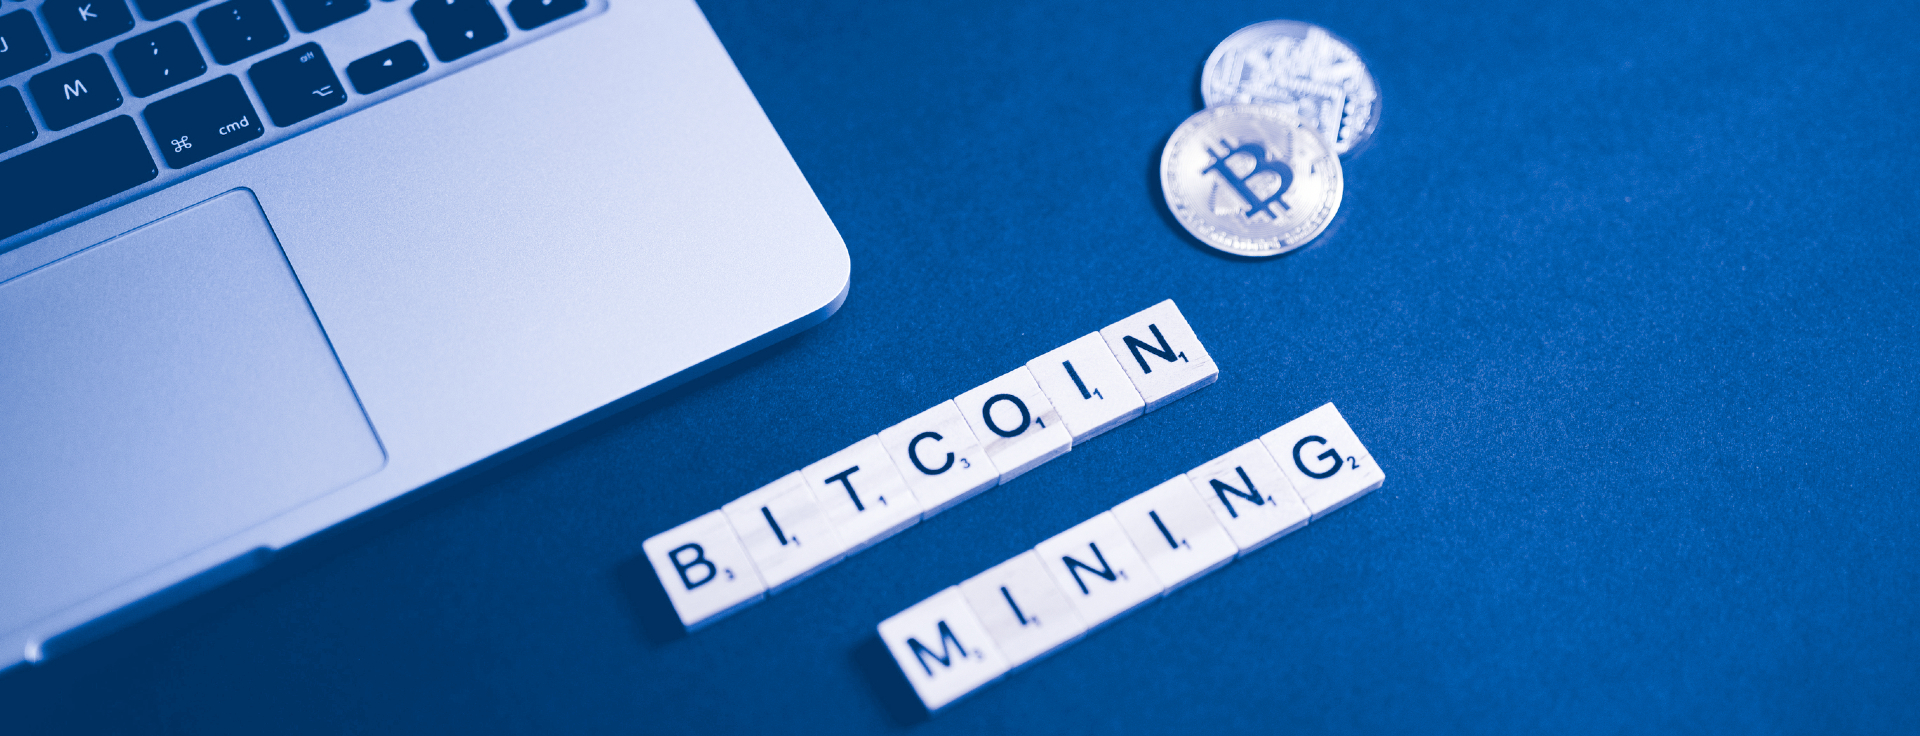 Blog: Bitcoin Mining and Its Benefits